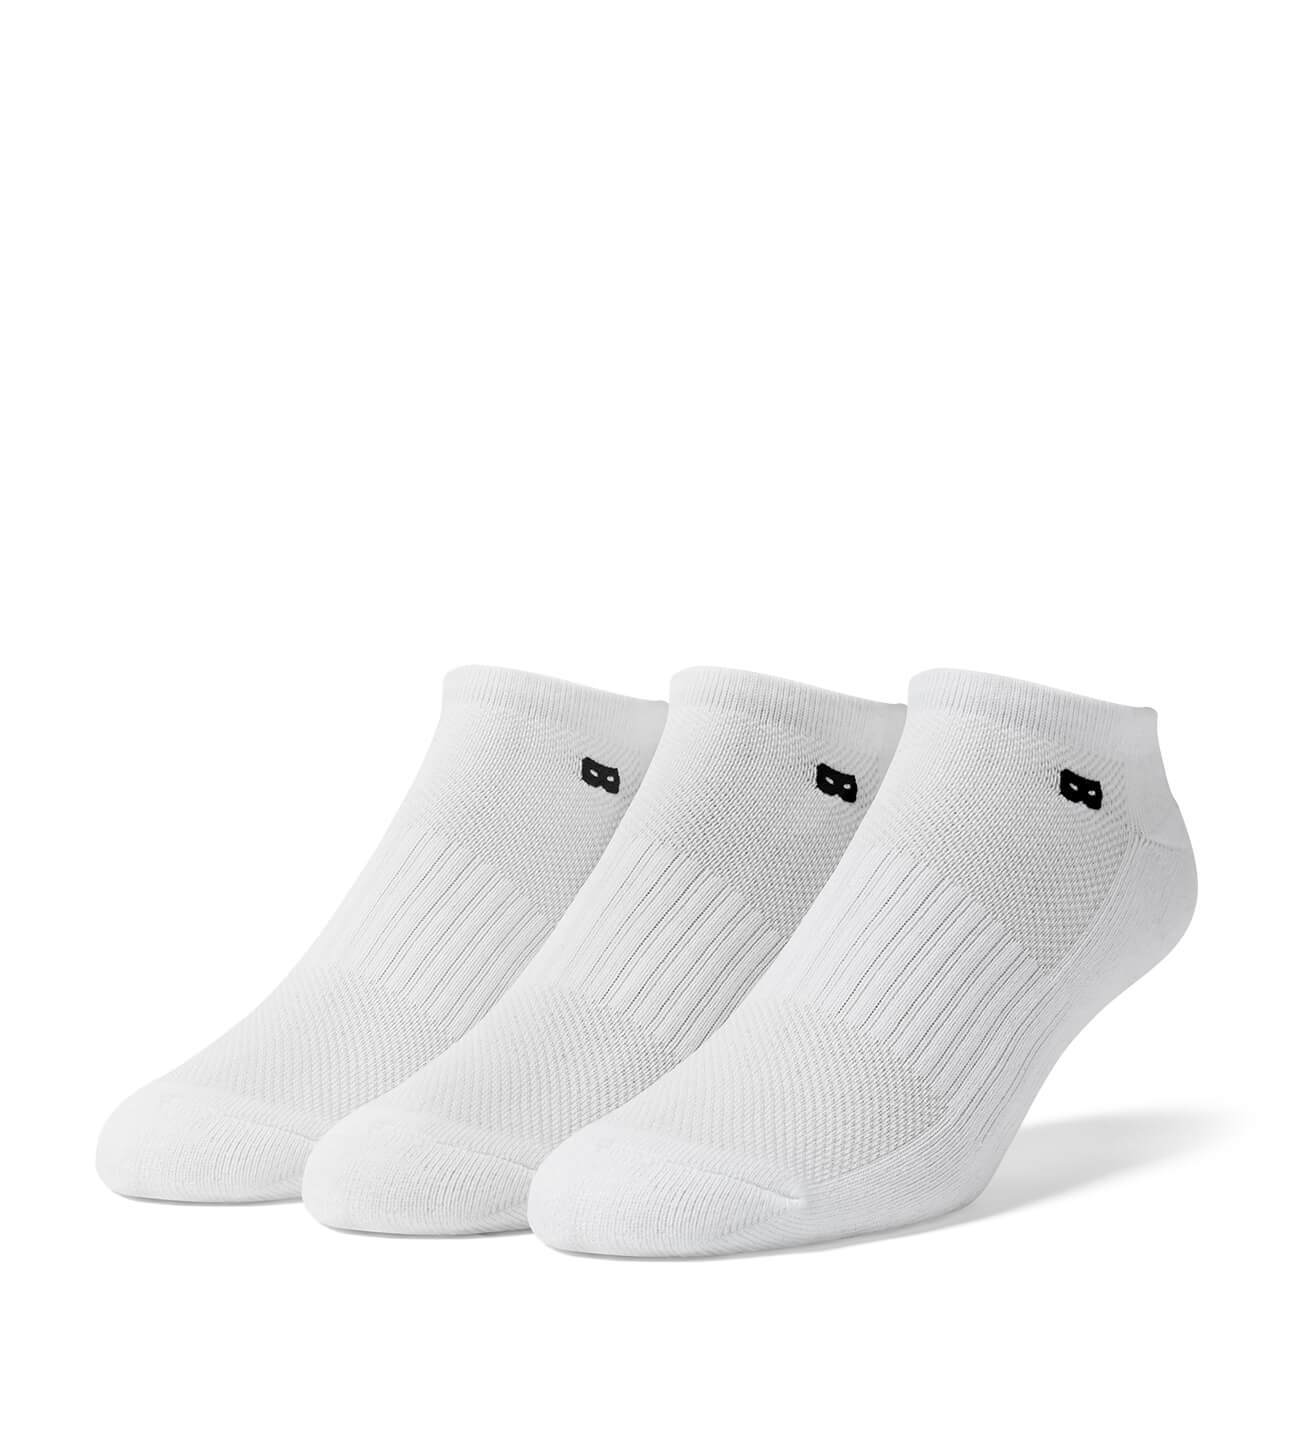 Whiteout Men's Low Cut Socks 3 Pack